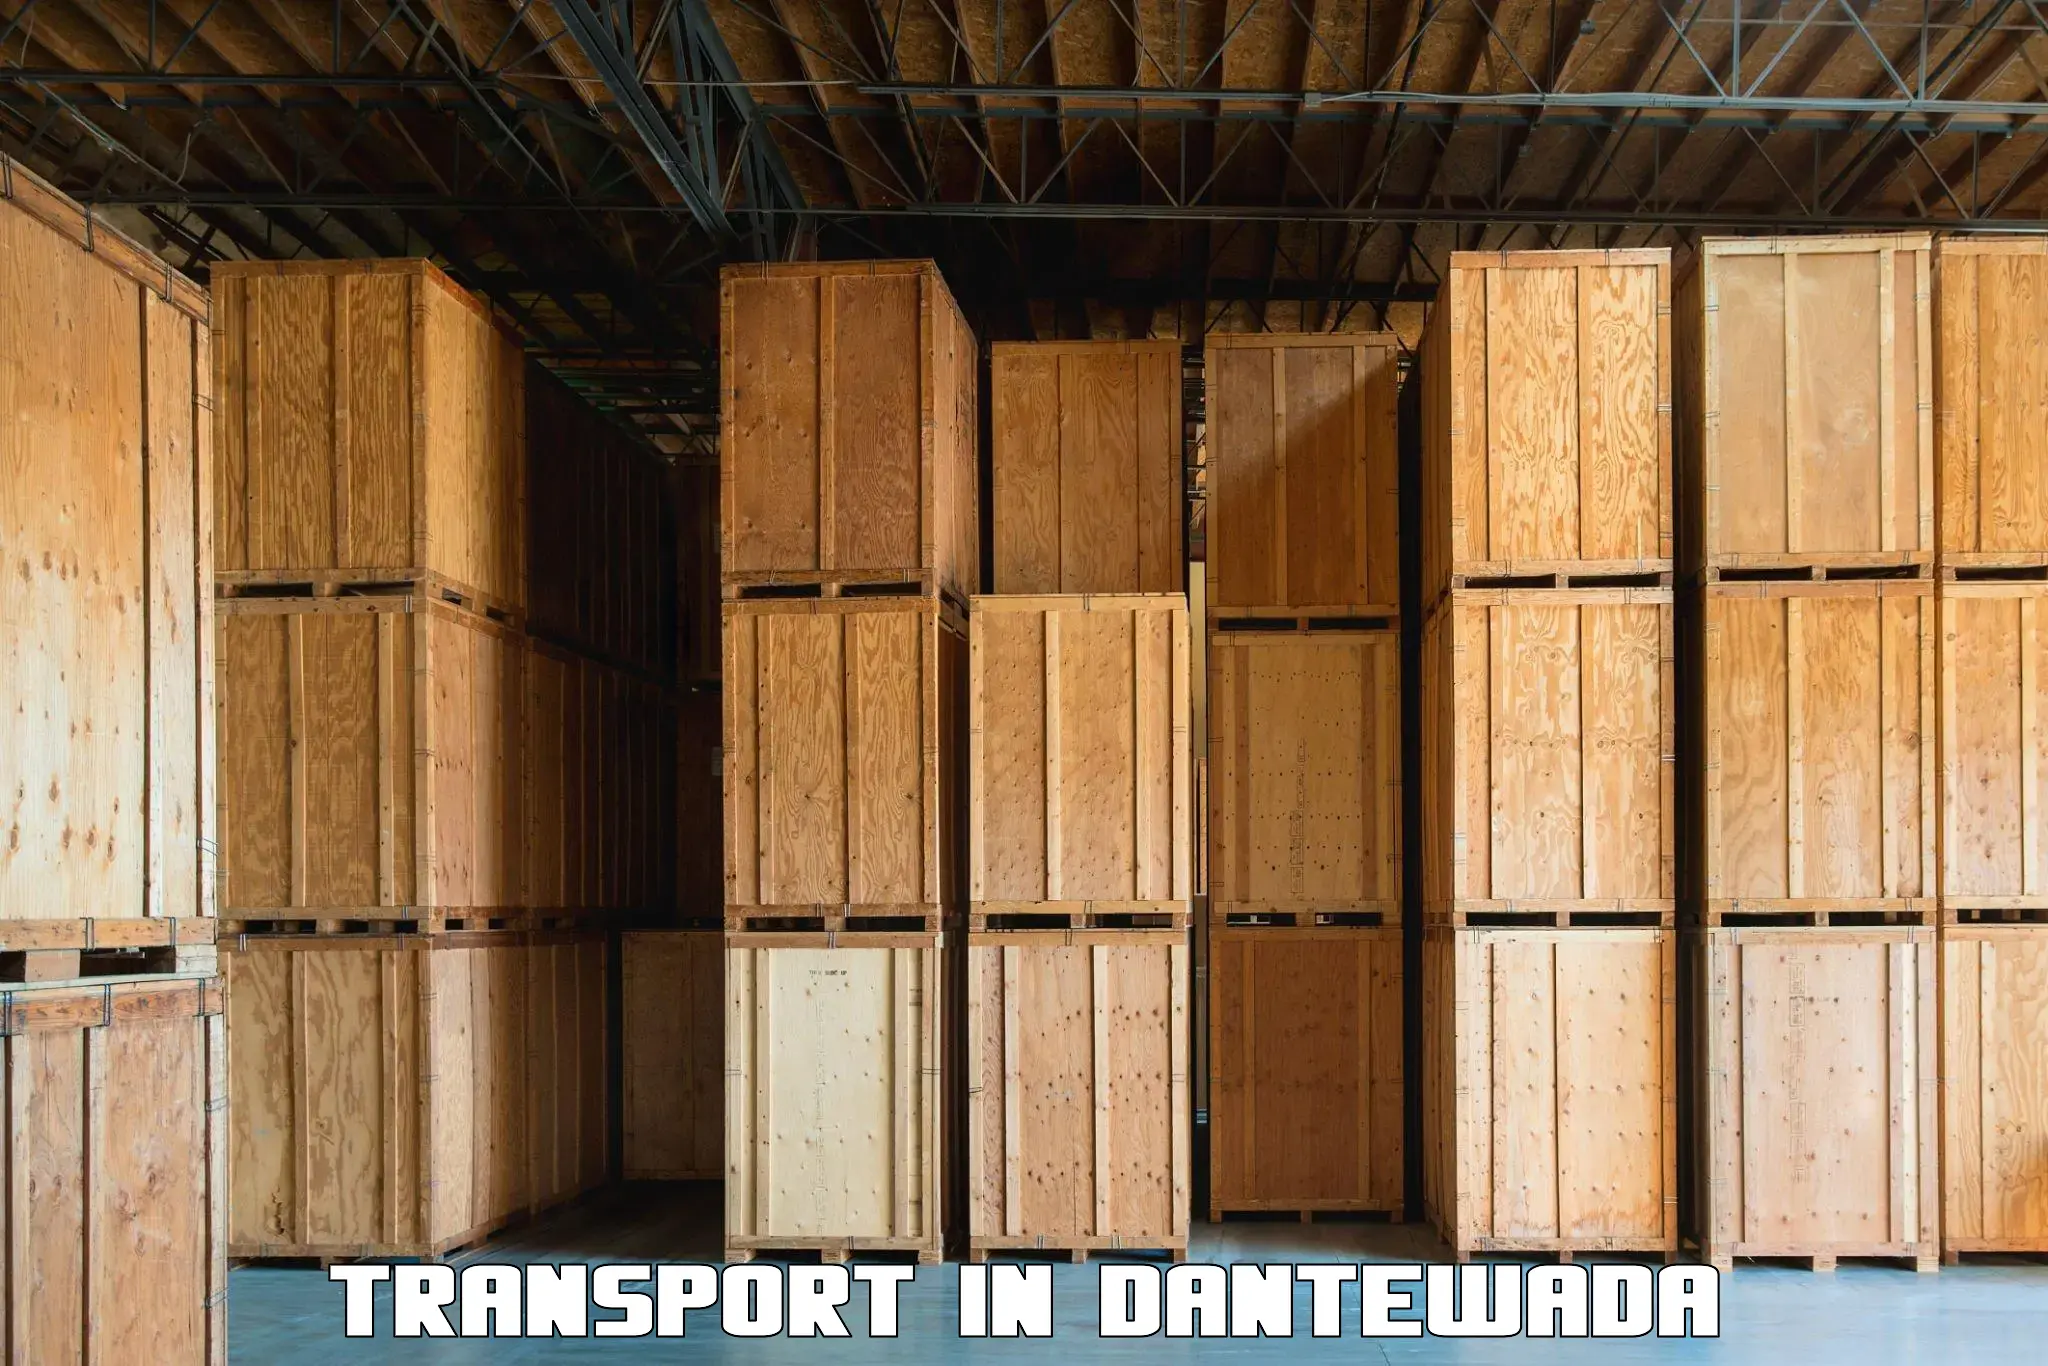 Transport in sharing in Dantewada